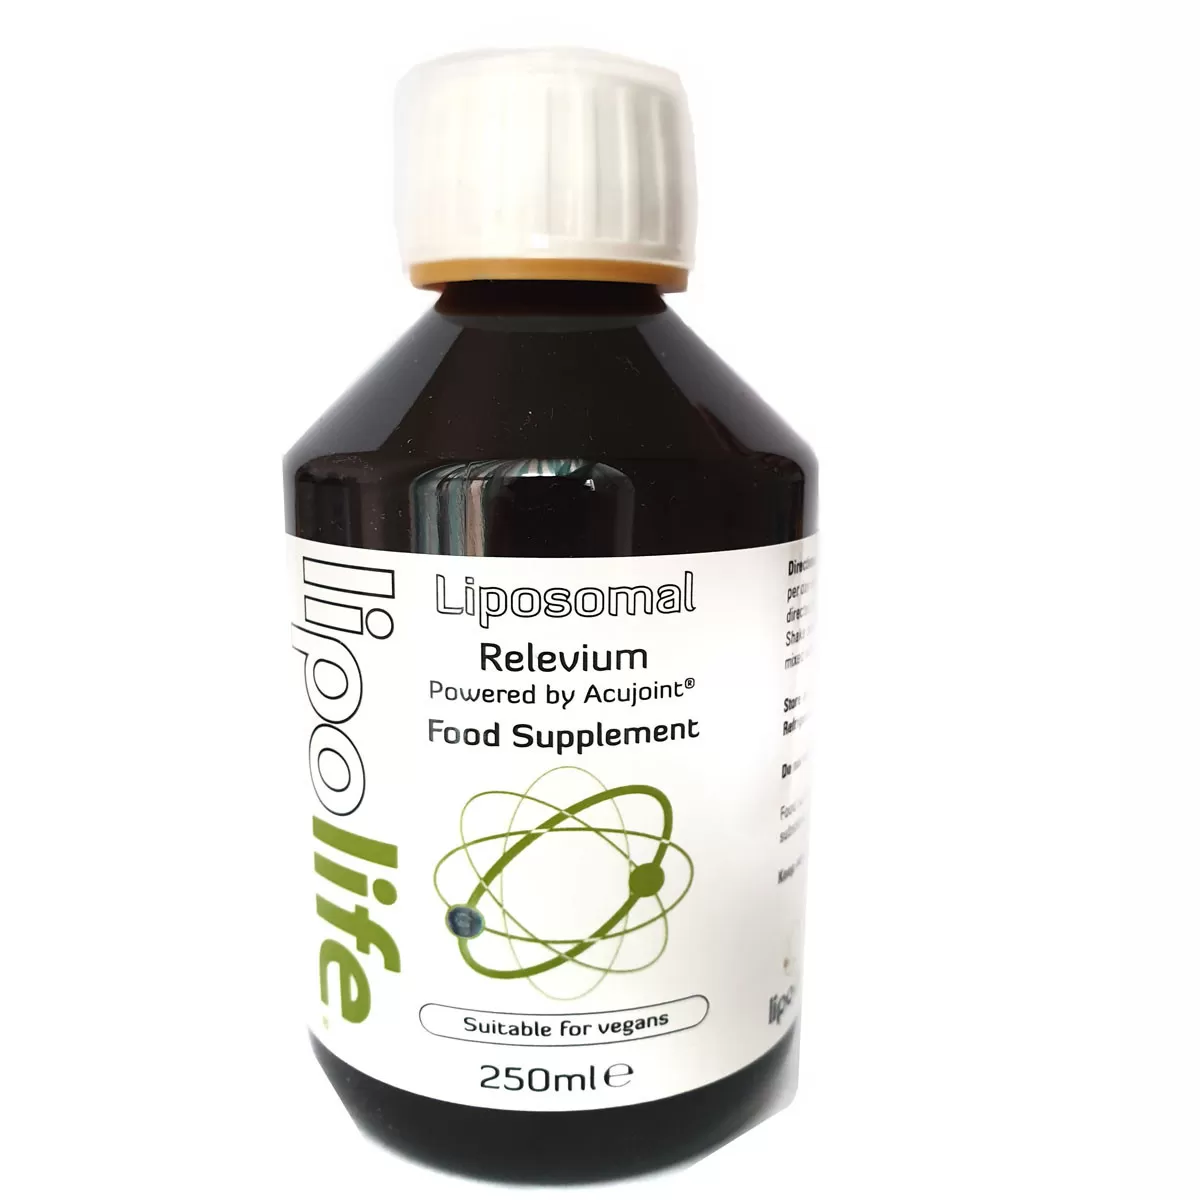 Lipolife lipsomal Relevium - Acujoint® 250 ml 